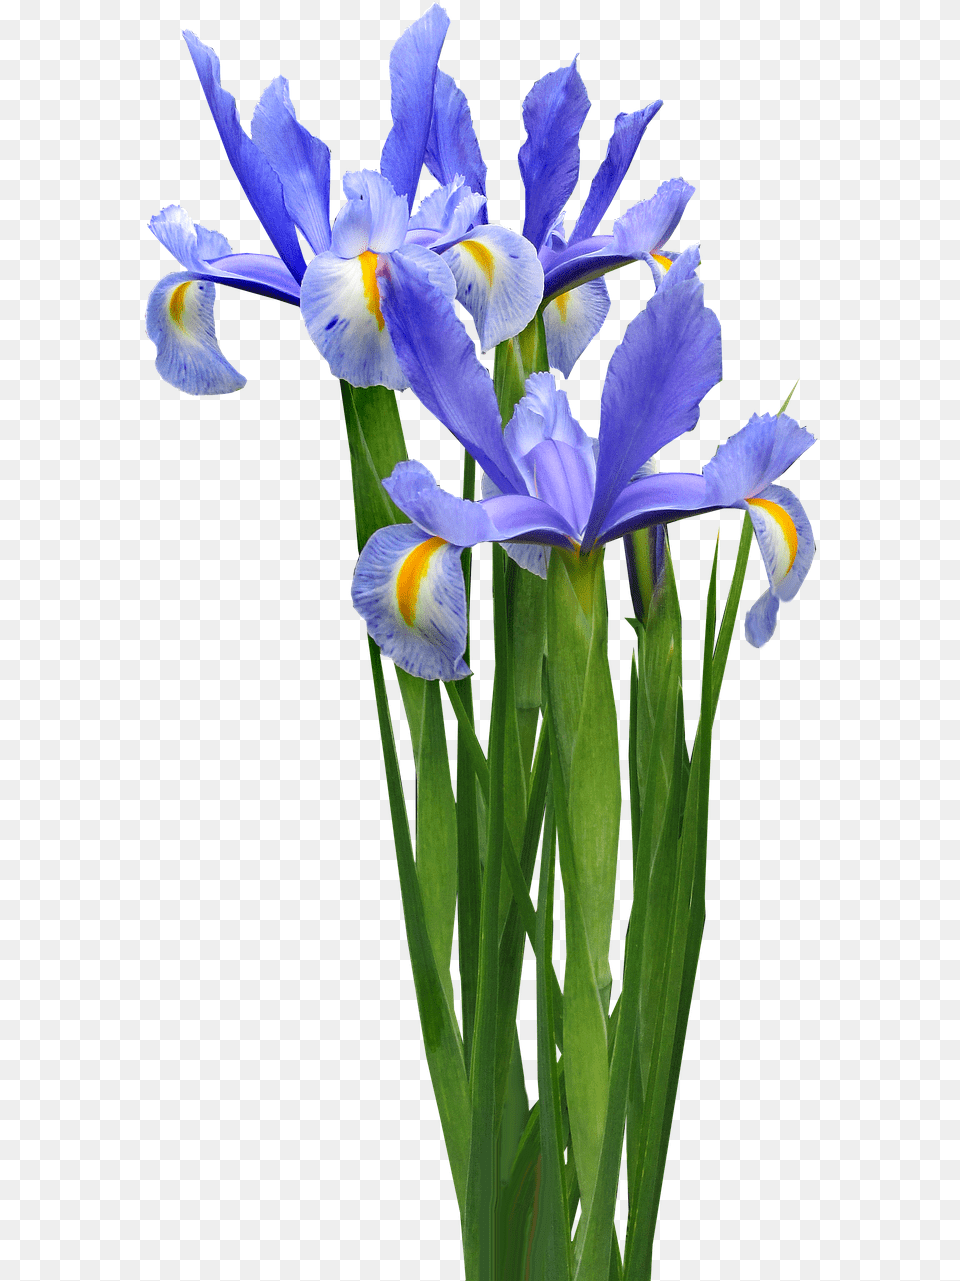 Transparent Iris Flower Image Iris Flower Transparent, Plant, Petal Free Png Download